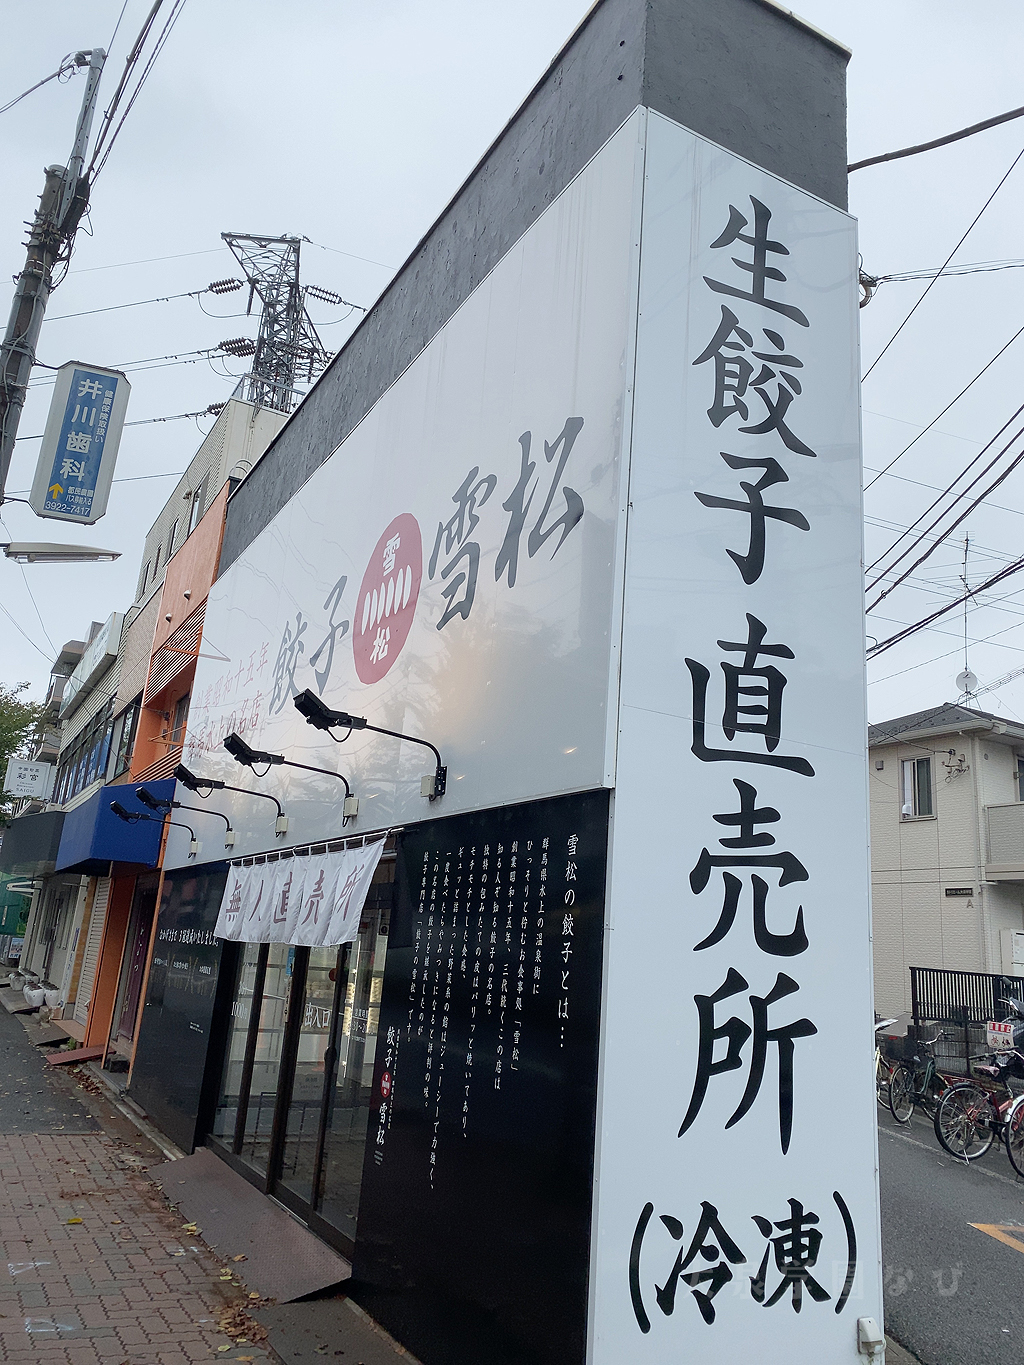 24時間 無人販売の「餃子の雪松 大泉学園店」